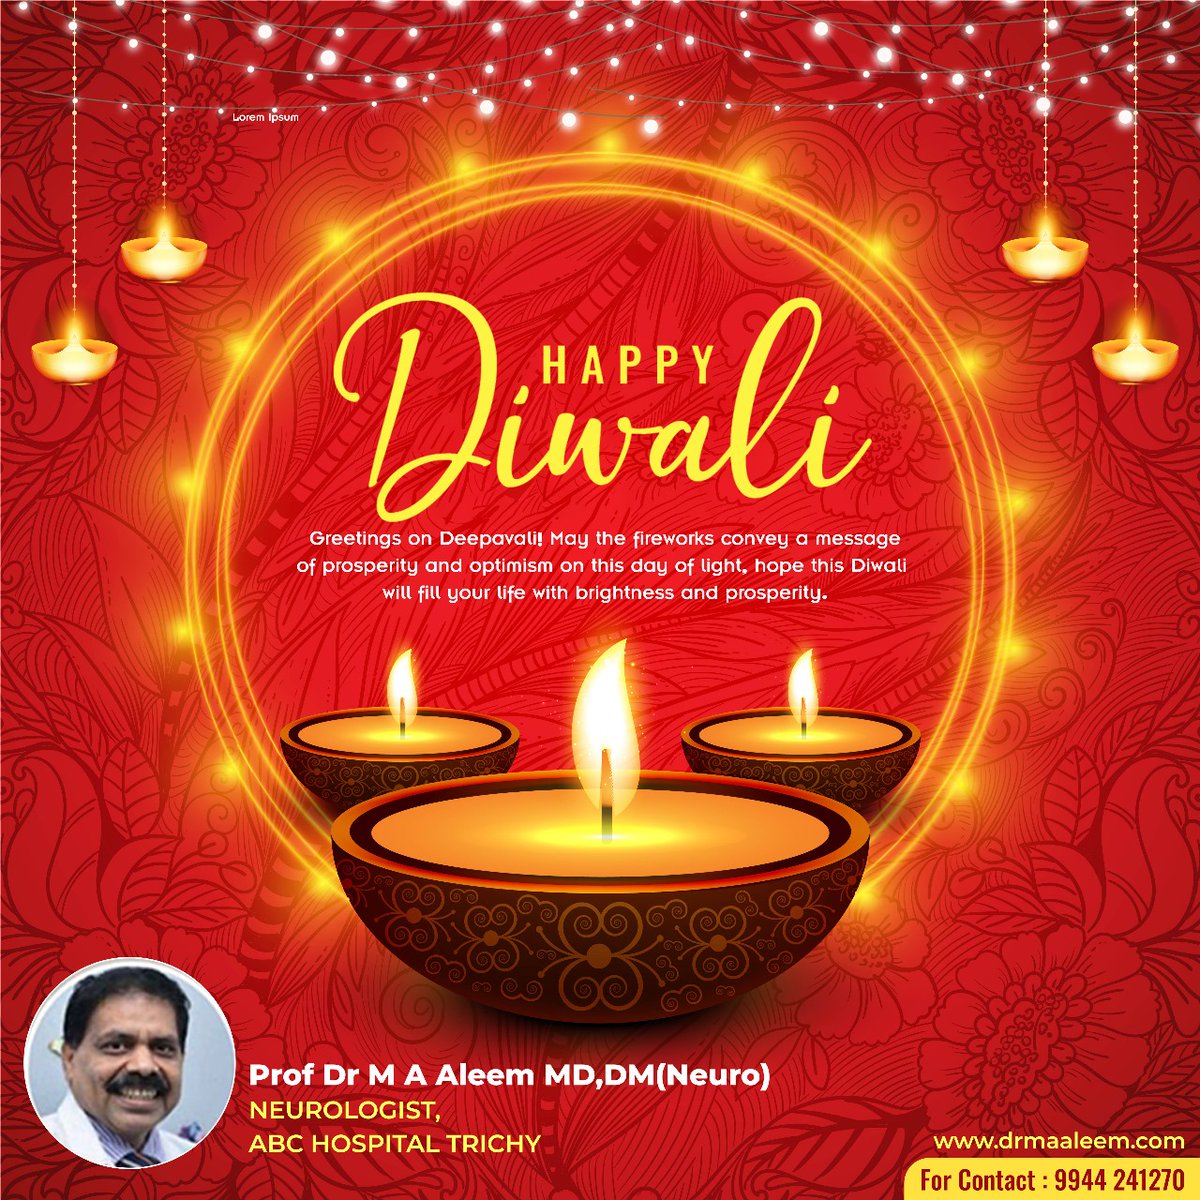 Wish you your family a Happy #Pollutionfree #Diwali2023 #SwachhDiwali #SwachhDiwaliShubhDiwali - M.A.Aleem Neurologist #SwachhBharat Ambassador 
#Trichy #TamilNadu #India